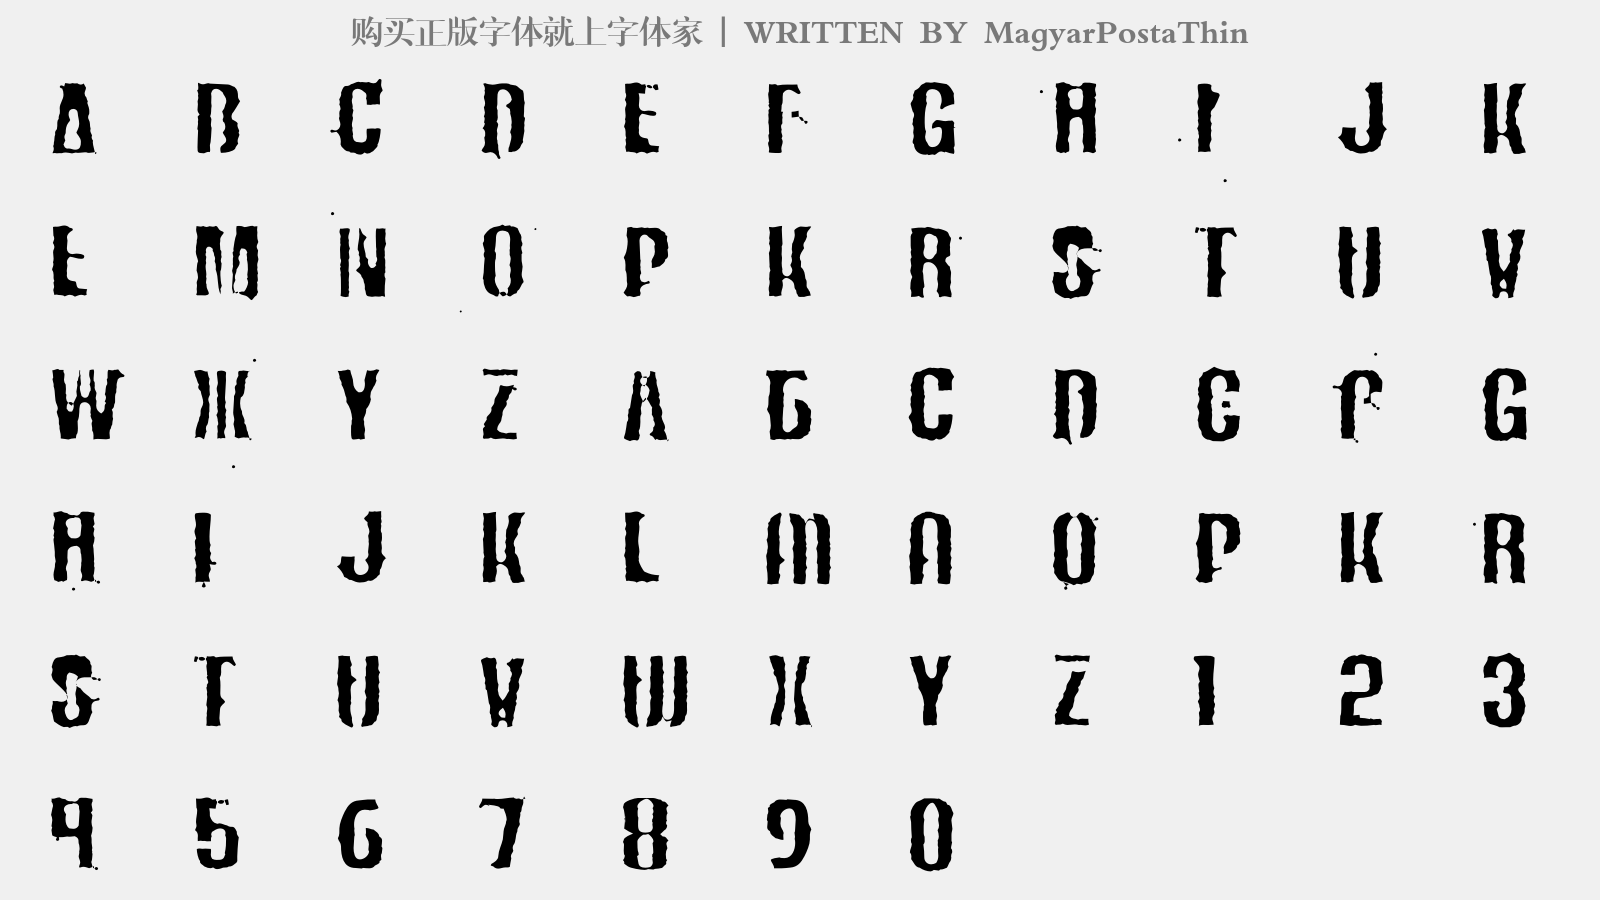 MagyarPostaThin - 大写字母/小写字母/数字